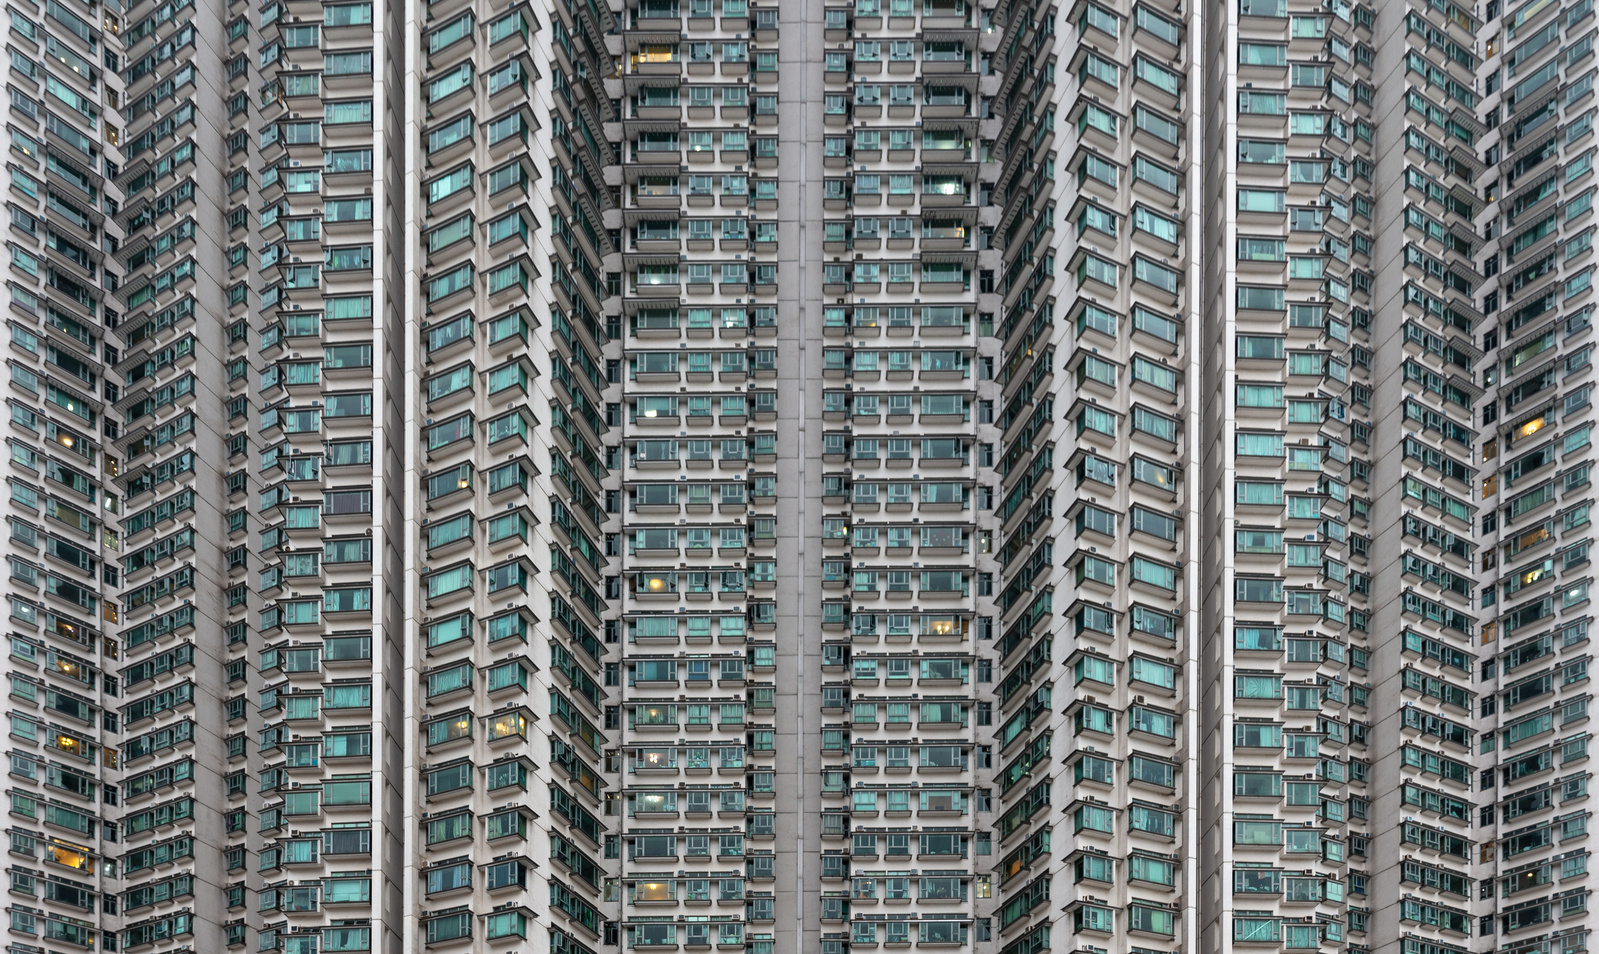 Stort lägenhetskomplex fotograferat i Hong Kong / Large apartment complex photographed in Hong Kong